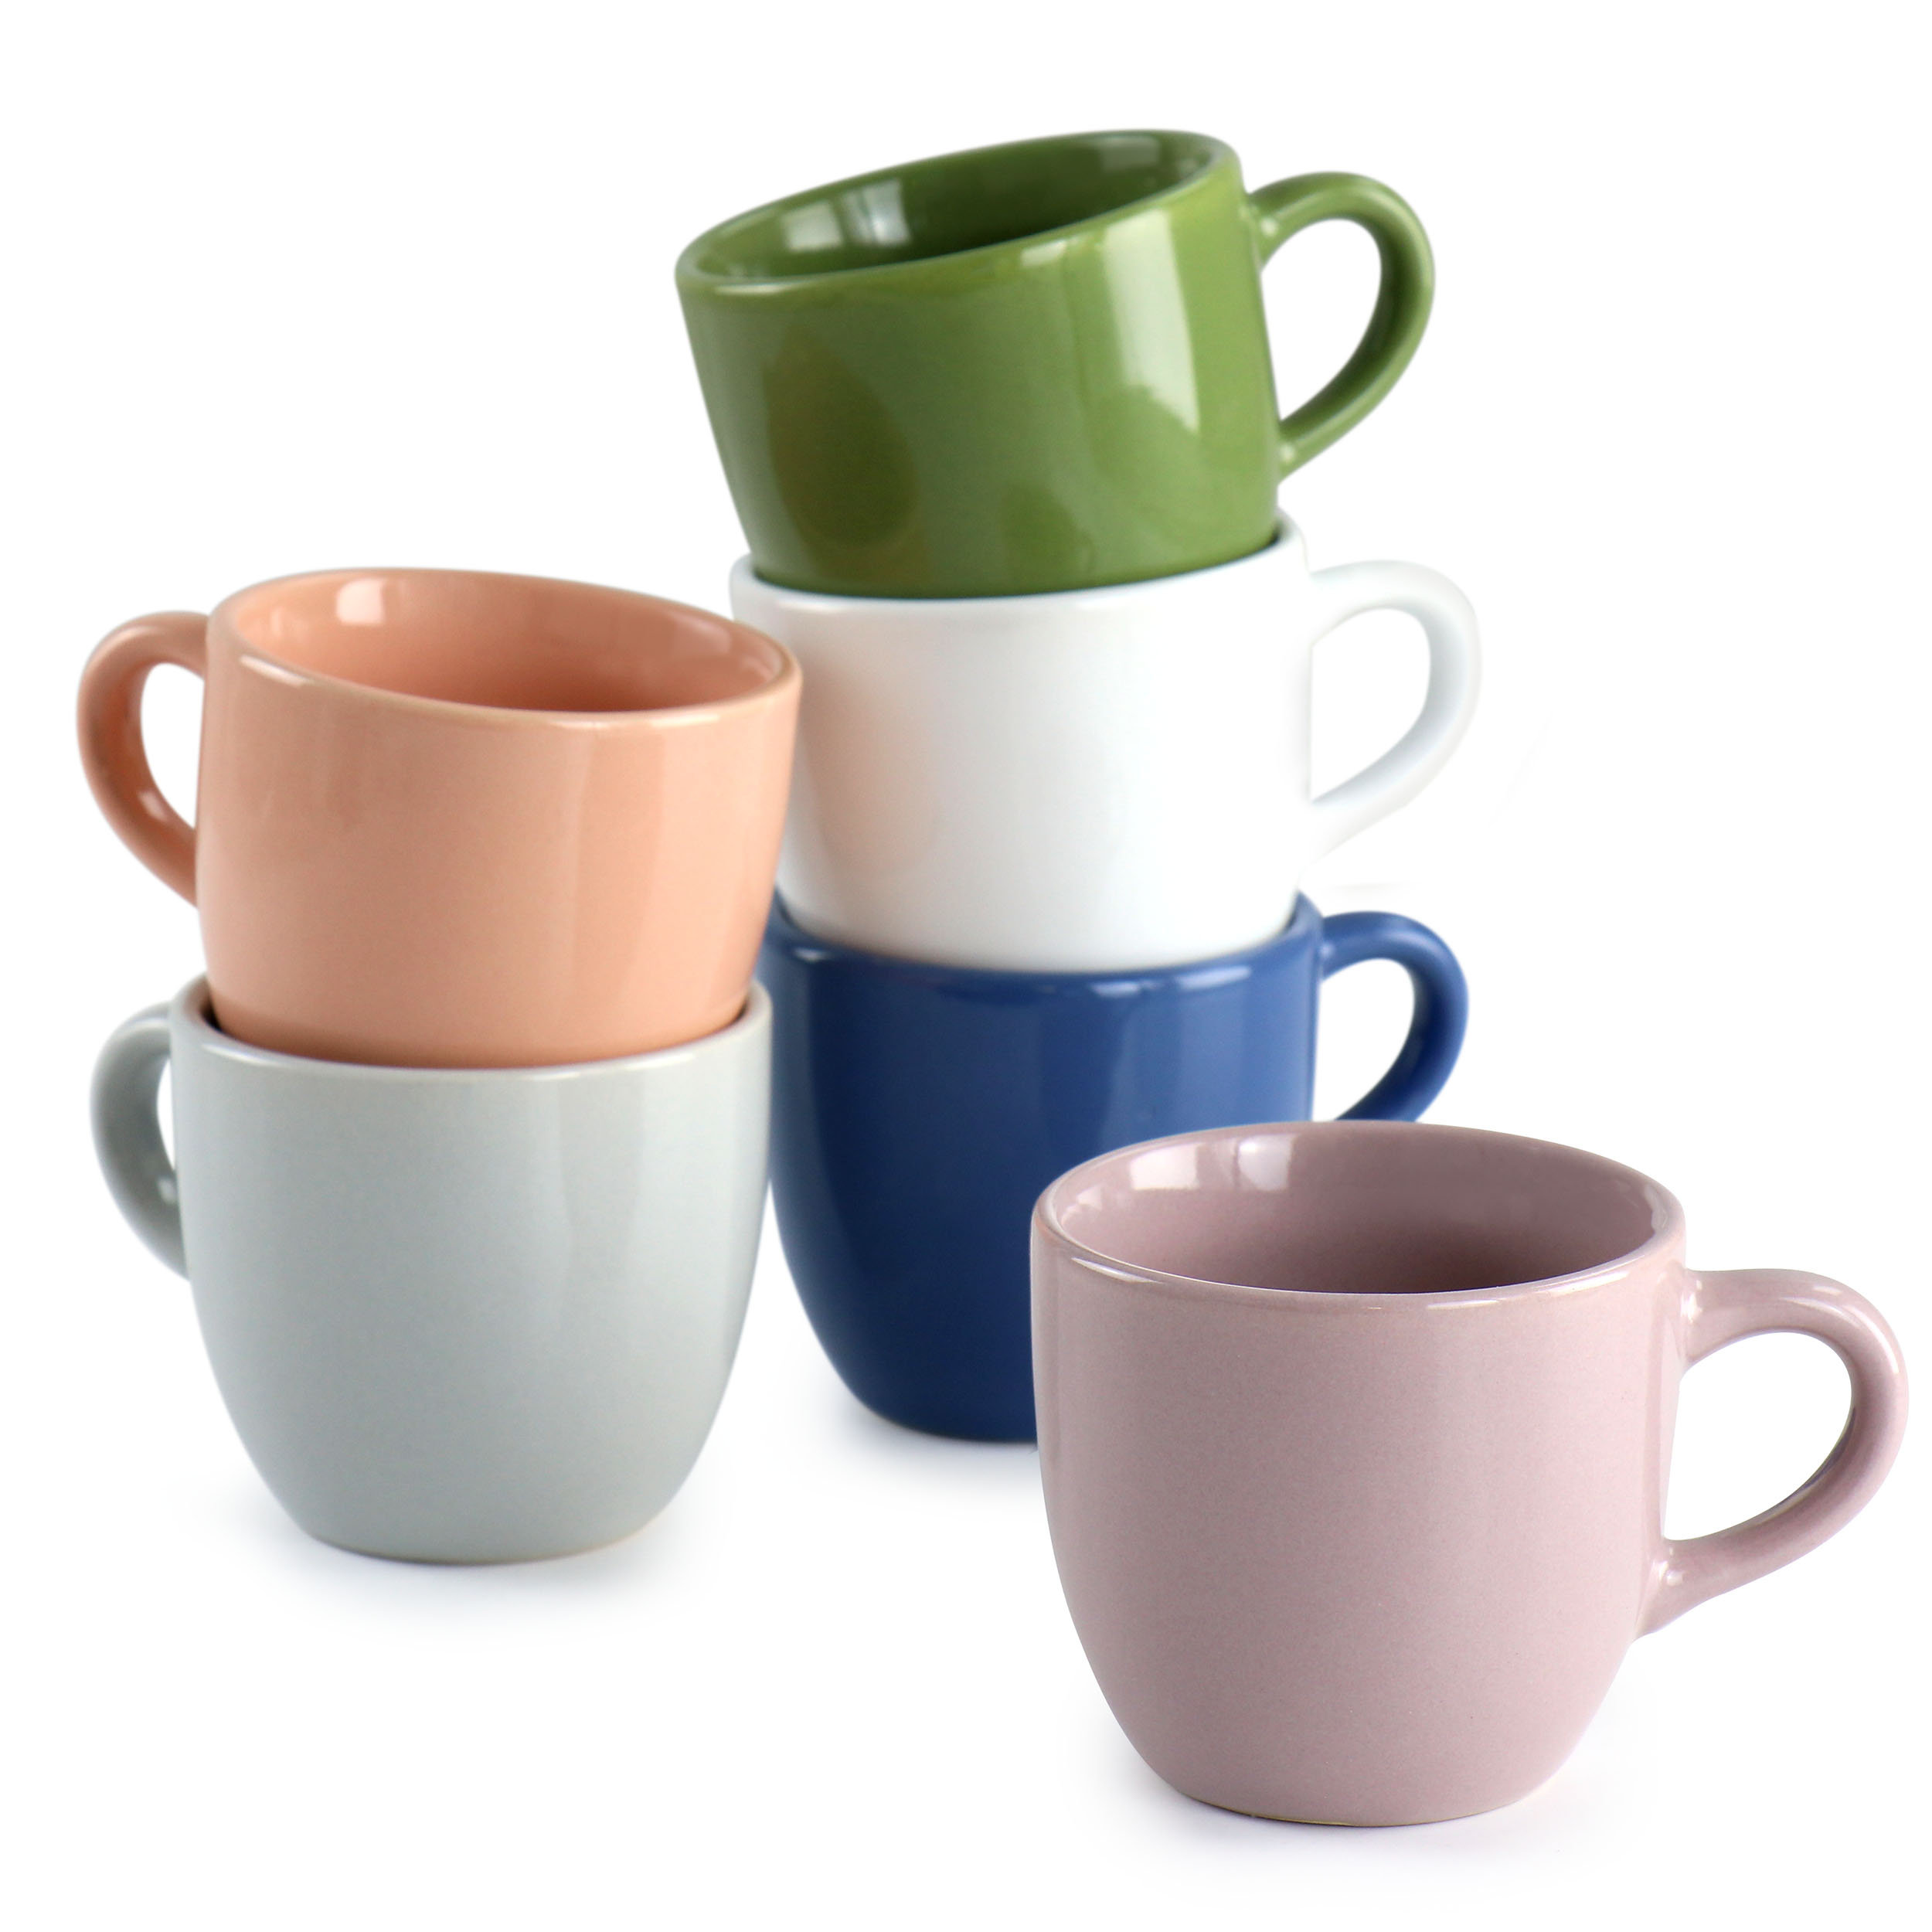 Set of 6 Colorful Porcelain Espresso Cup and Saucer Set - 2 oz, Gold Color